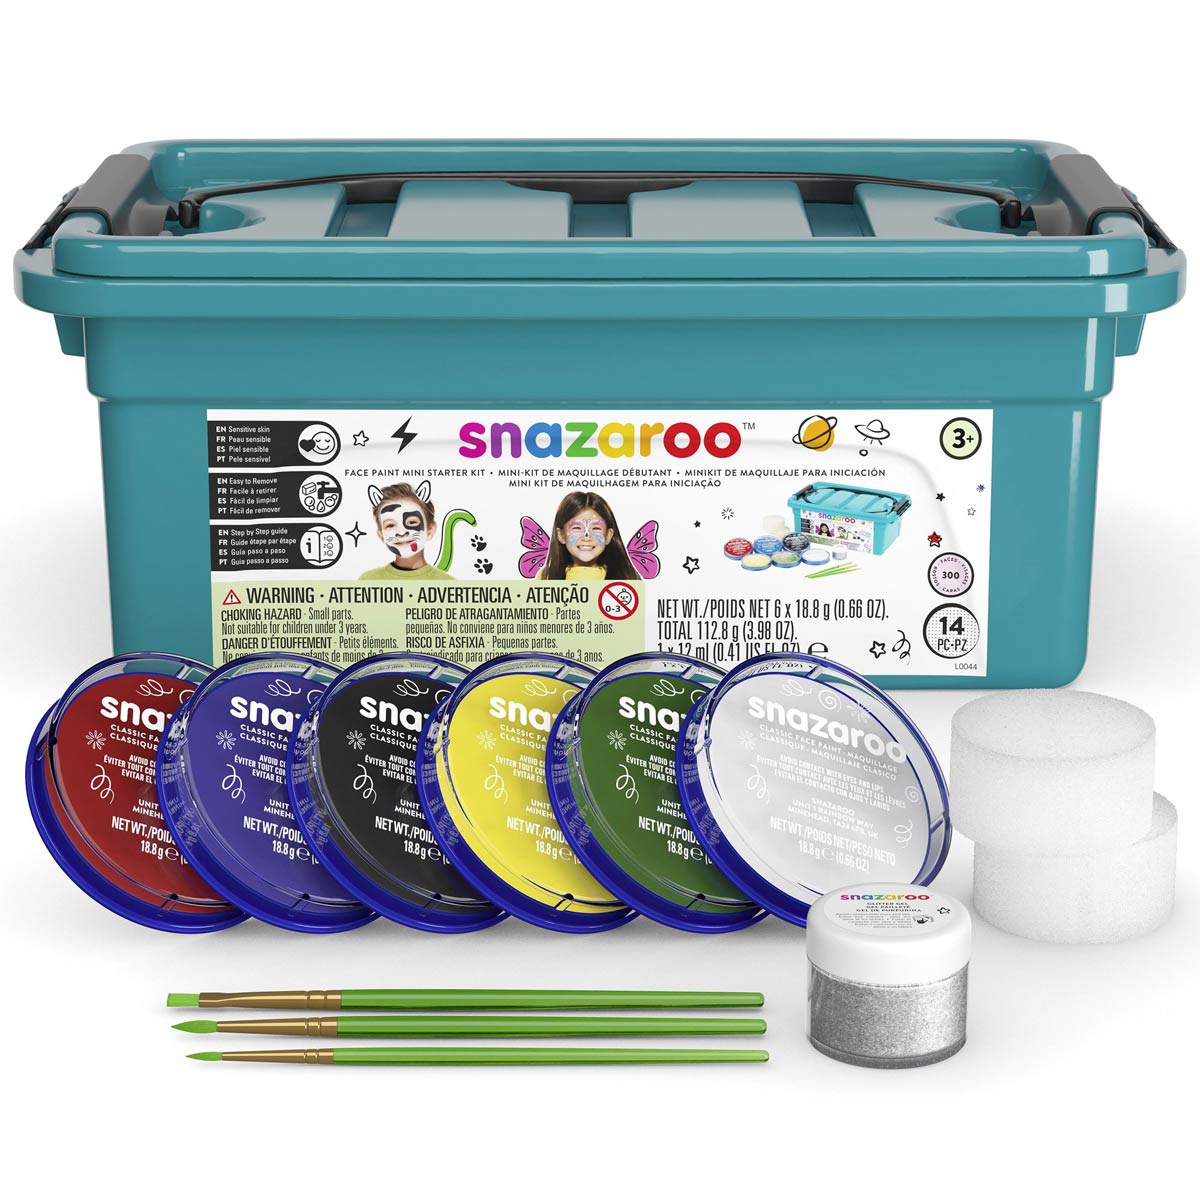 Snazaroo - mini kit de démarrage